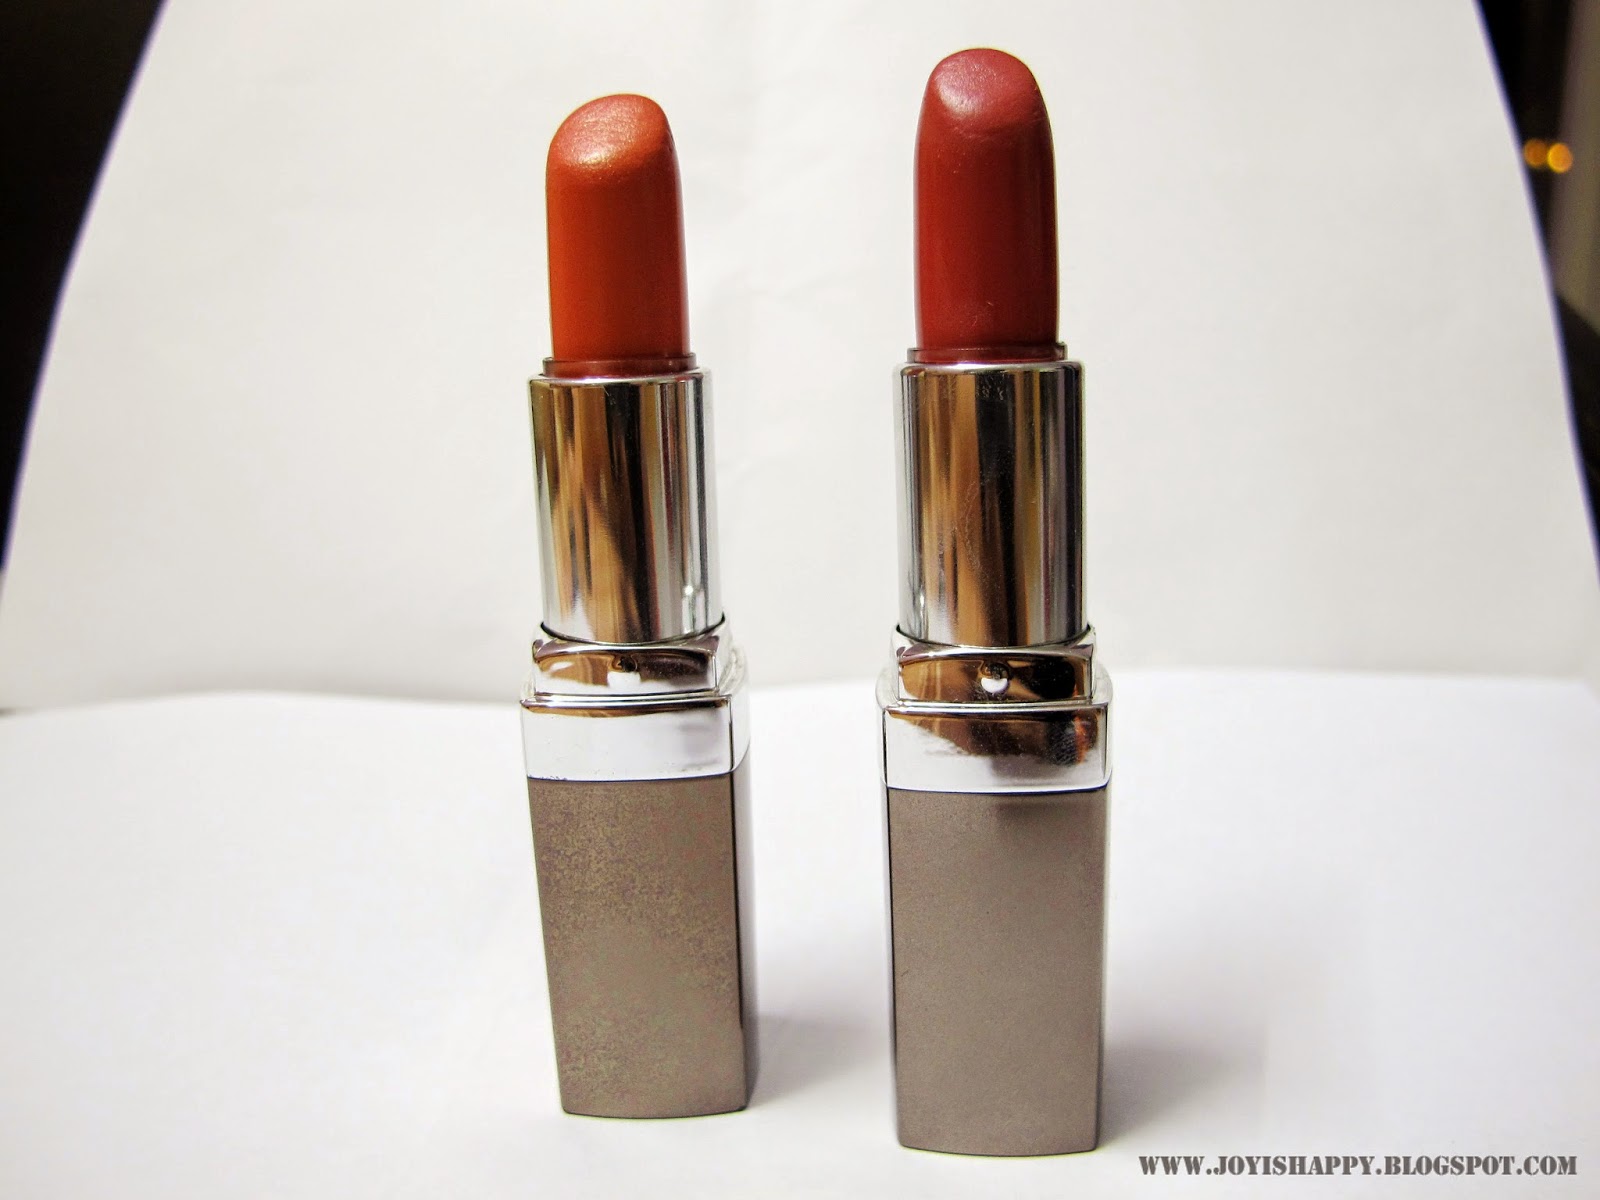 TheFaceShop Black Label Lipsticks review